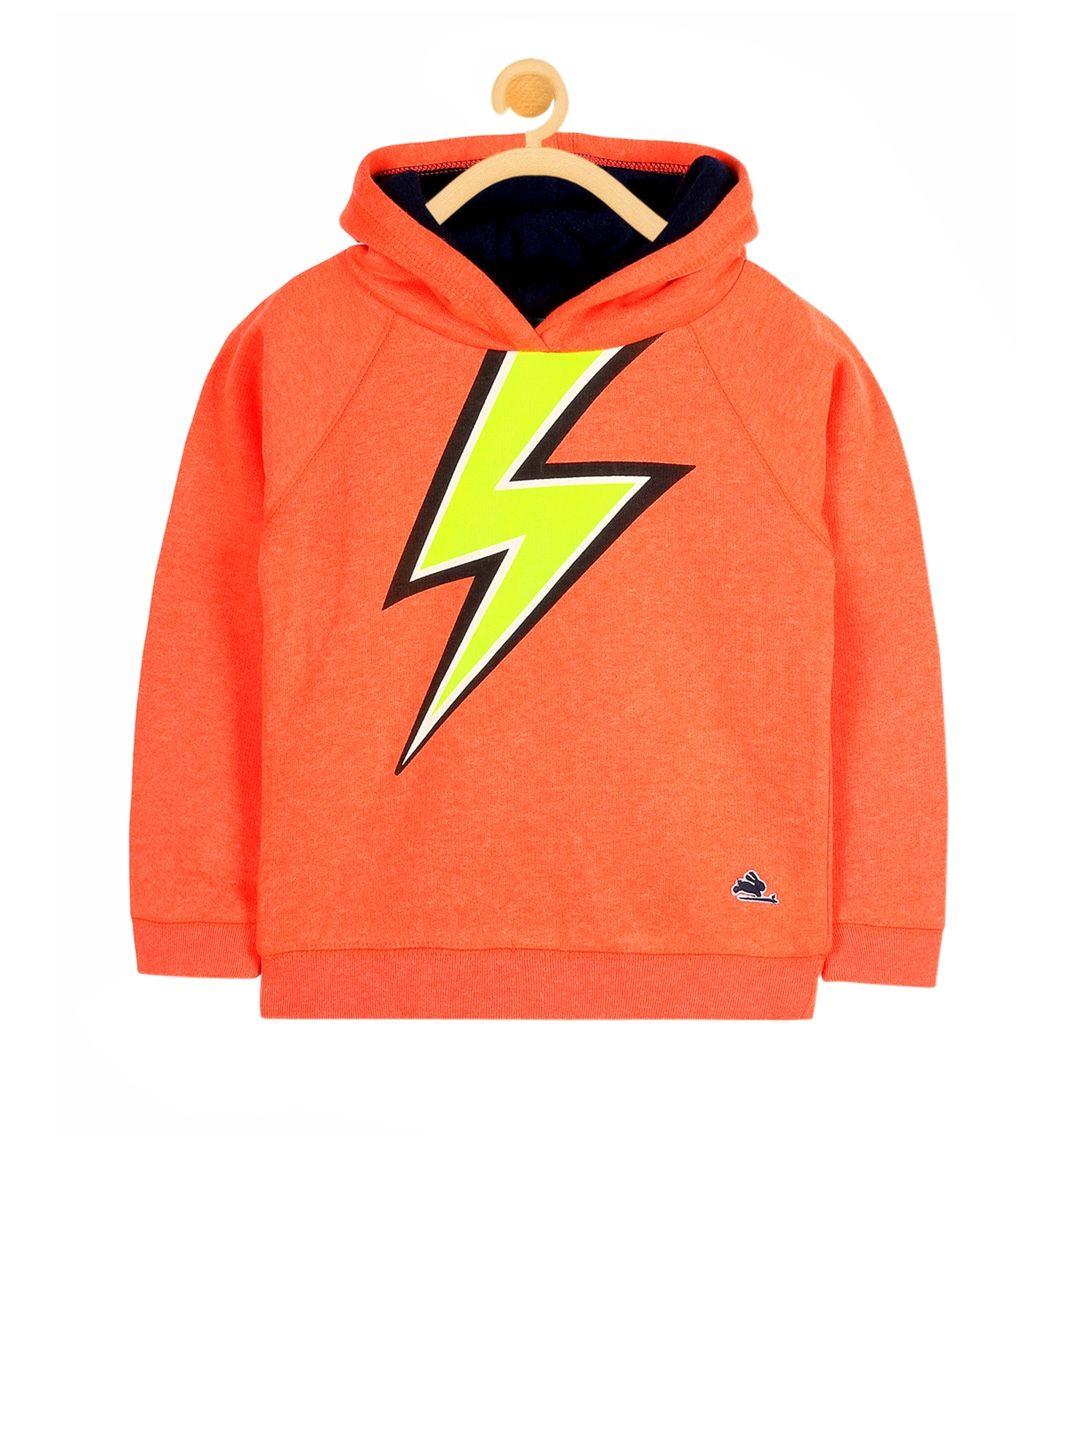 cherry crumble kids orange crumble lightning printed hooded sweatshirt